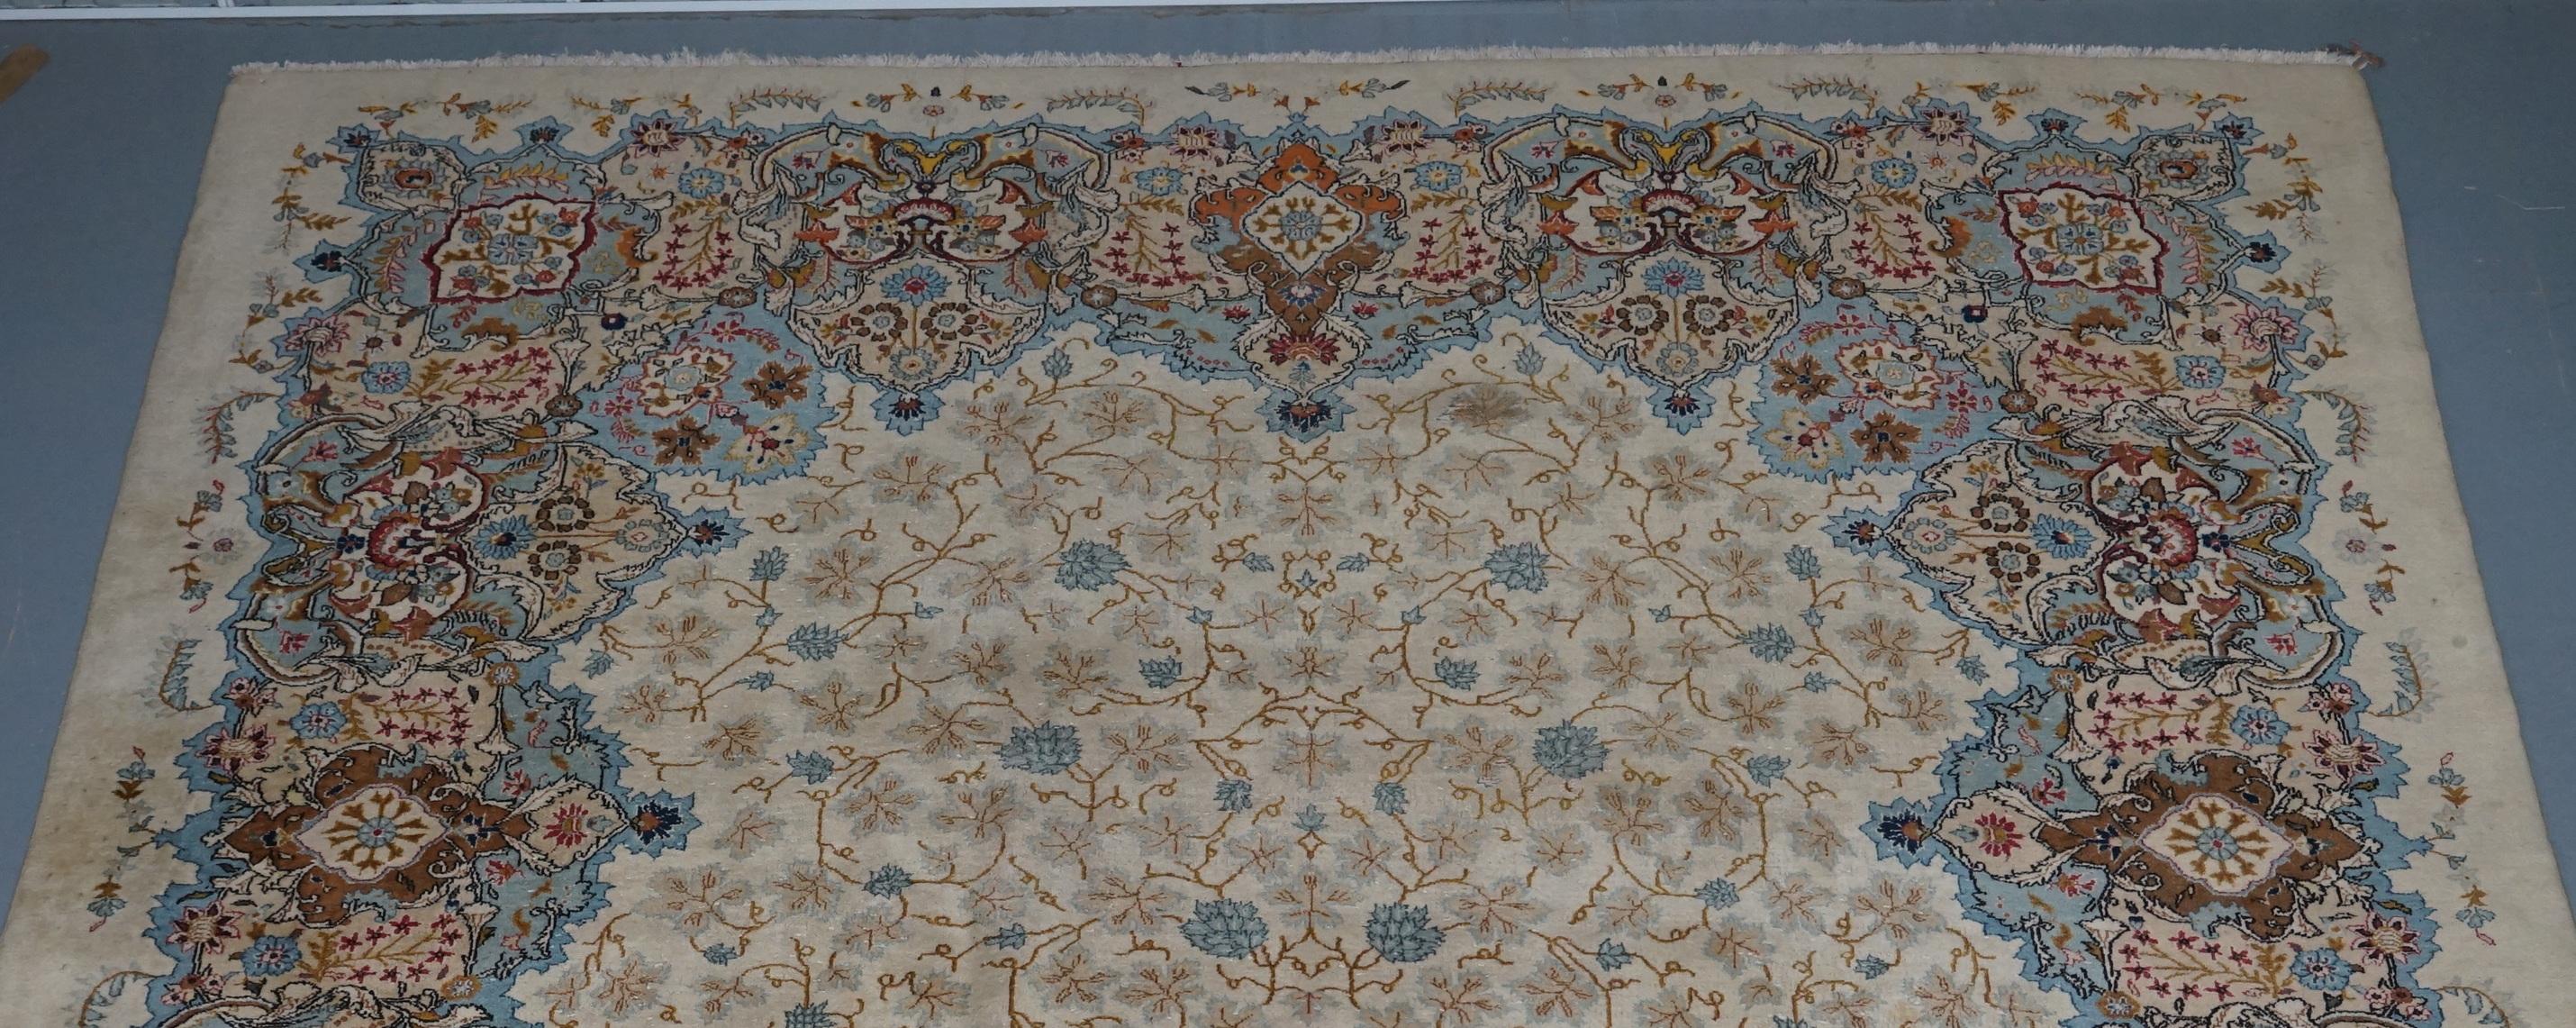 Hand-Crafted Massive Central Persian Royal Kashan Carpet Rug Pendant Medallion